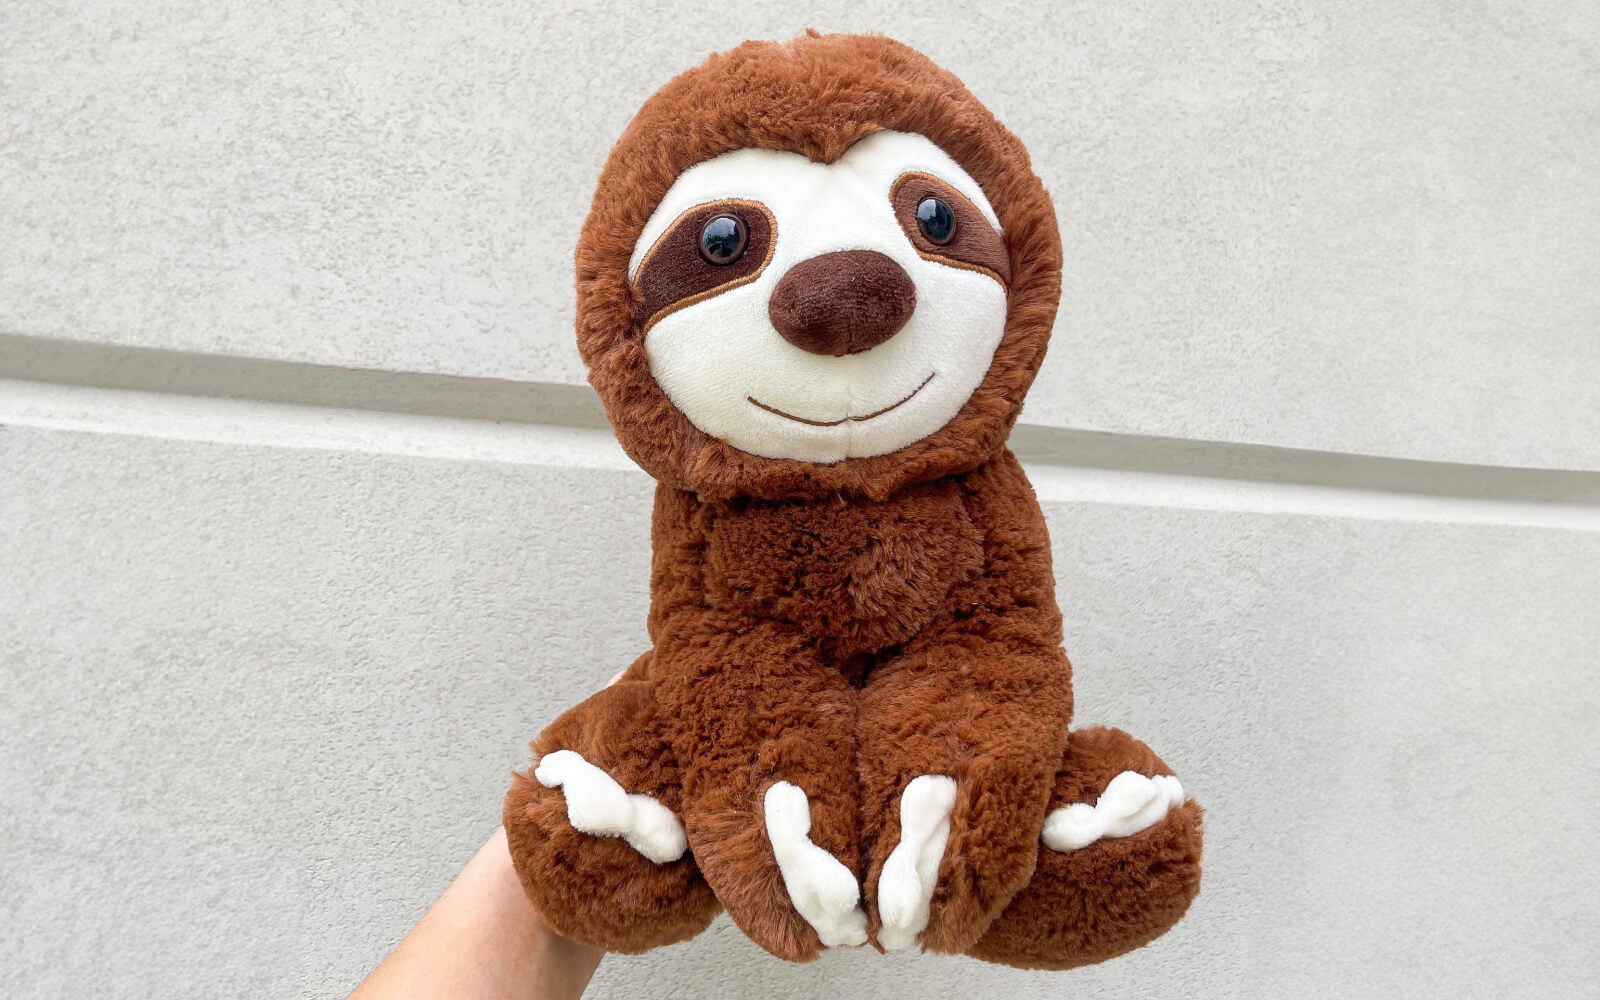 person holding sloth stuffed animal